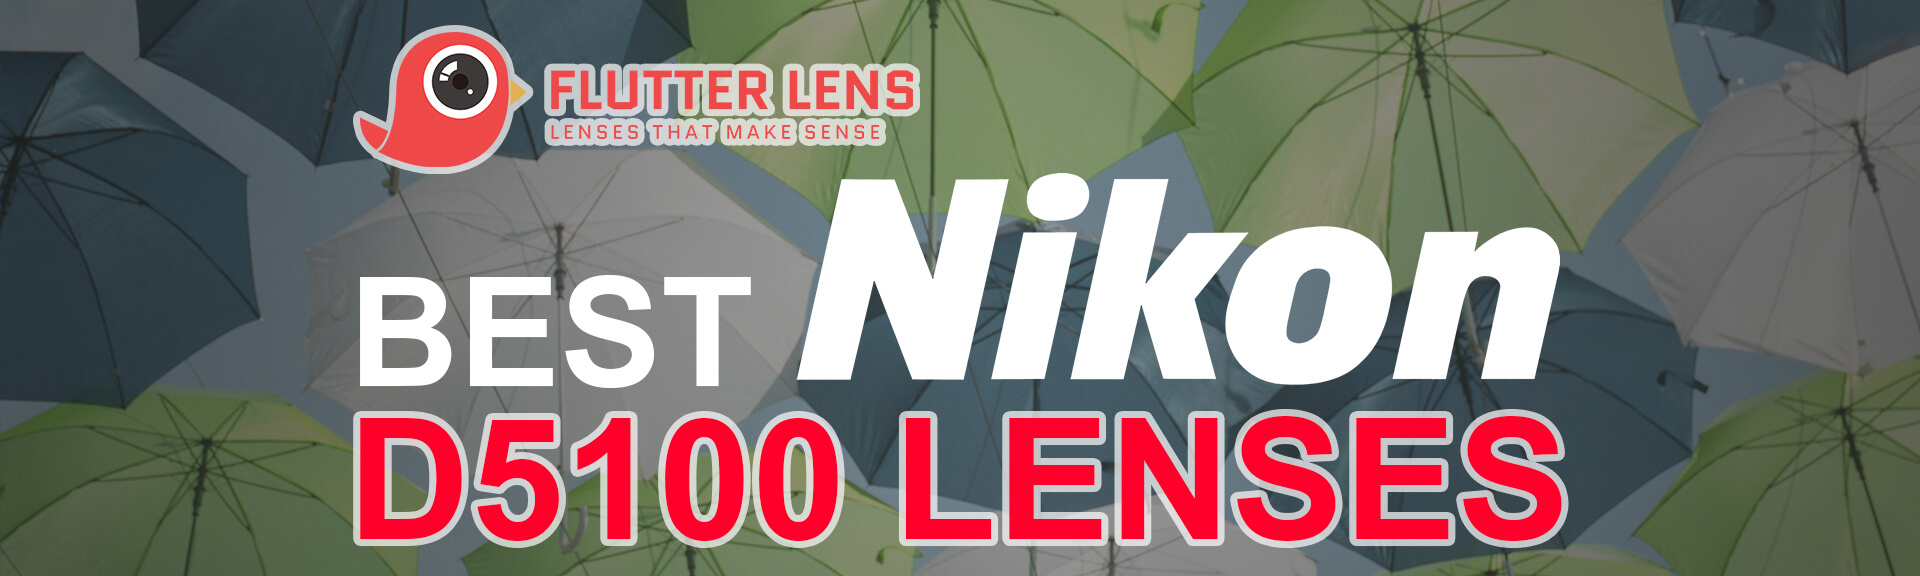 Best Nikon D5100 Lenses